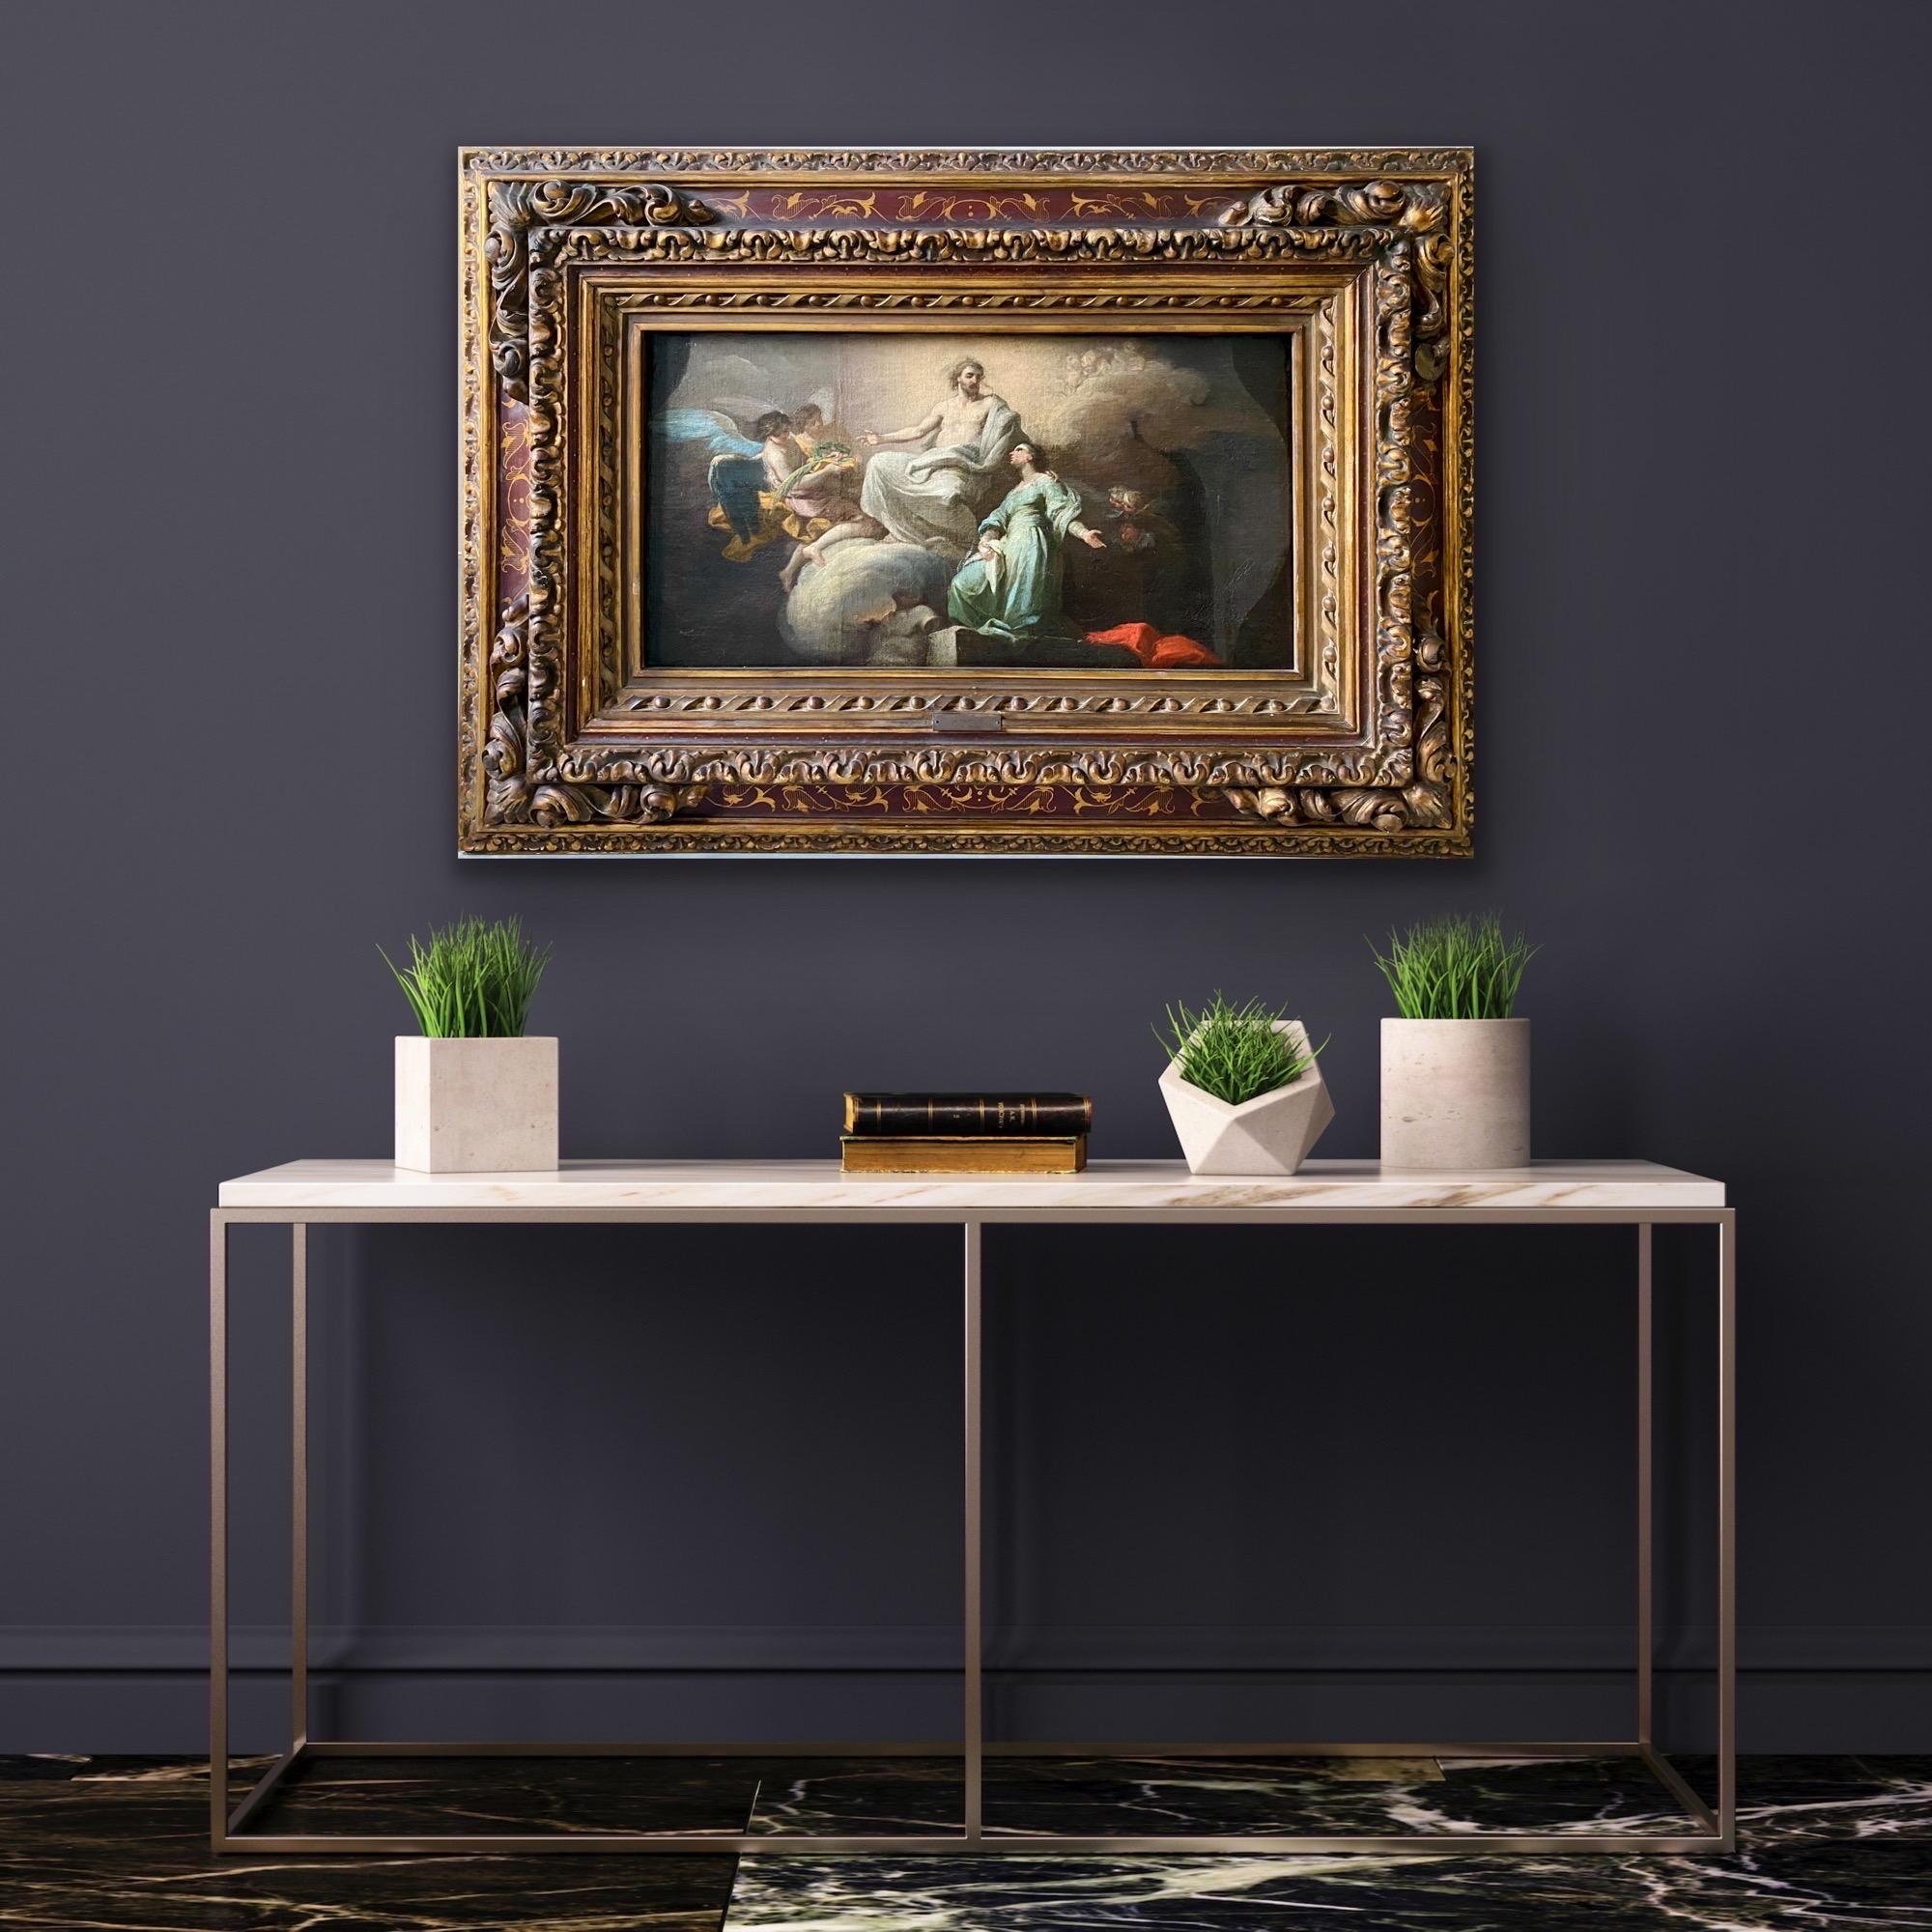 18th century Italian painting - The coronation of Saint Agnes - Solimena - Painting by Francesco Solimena